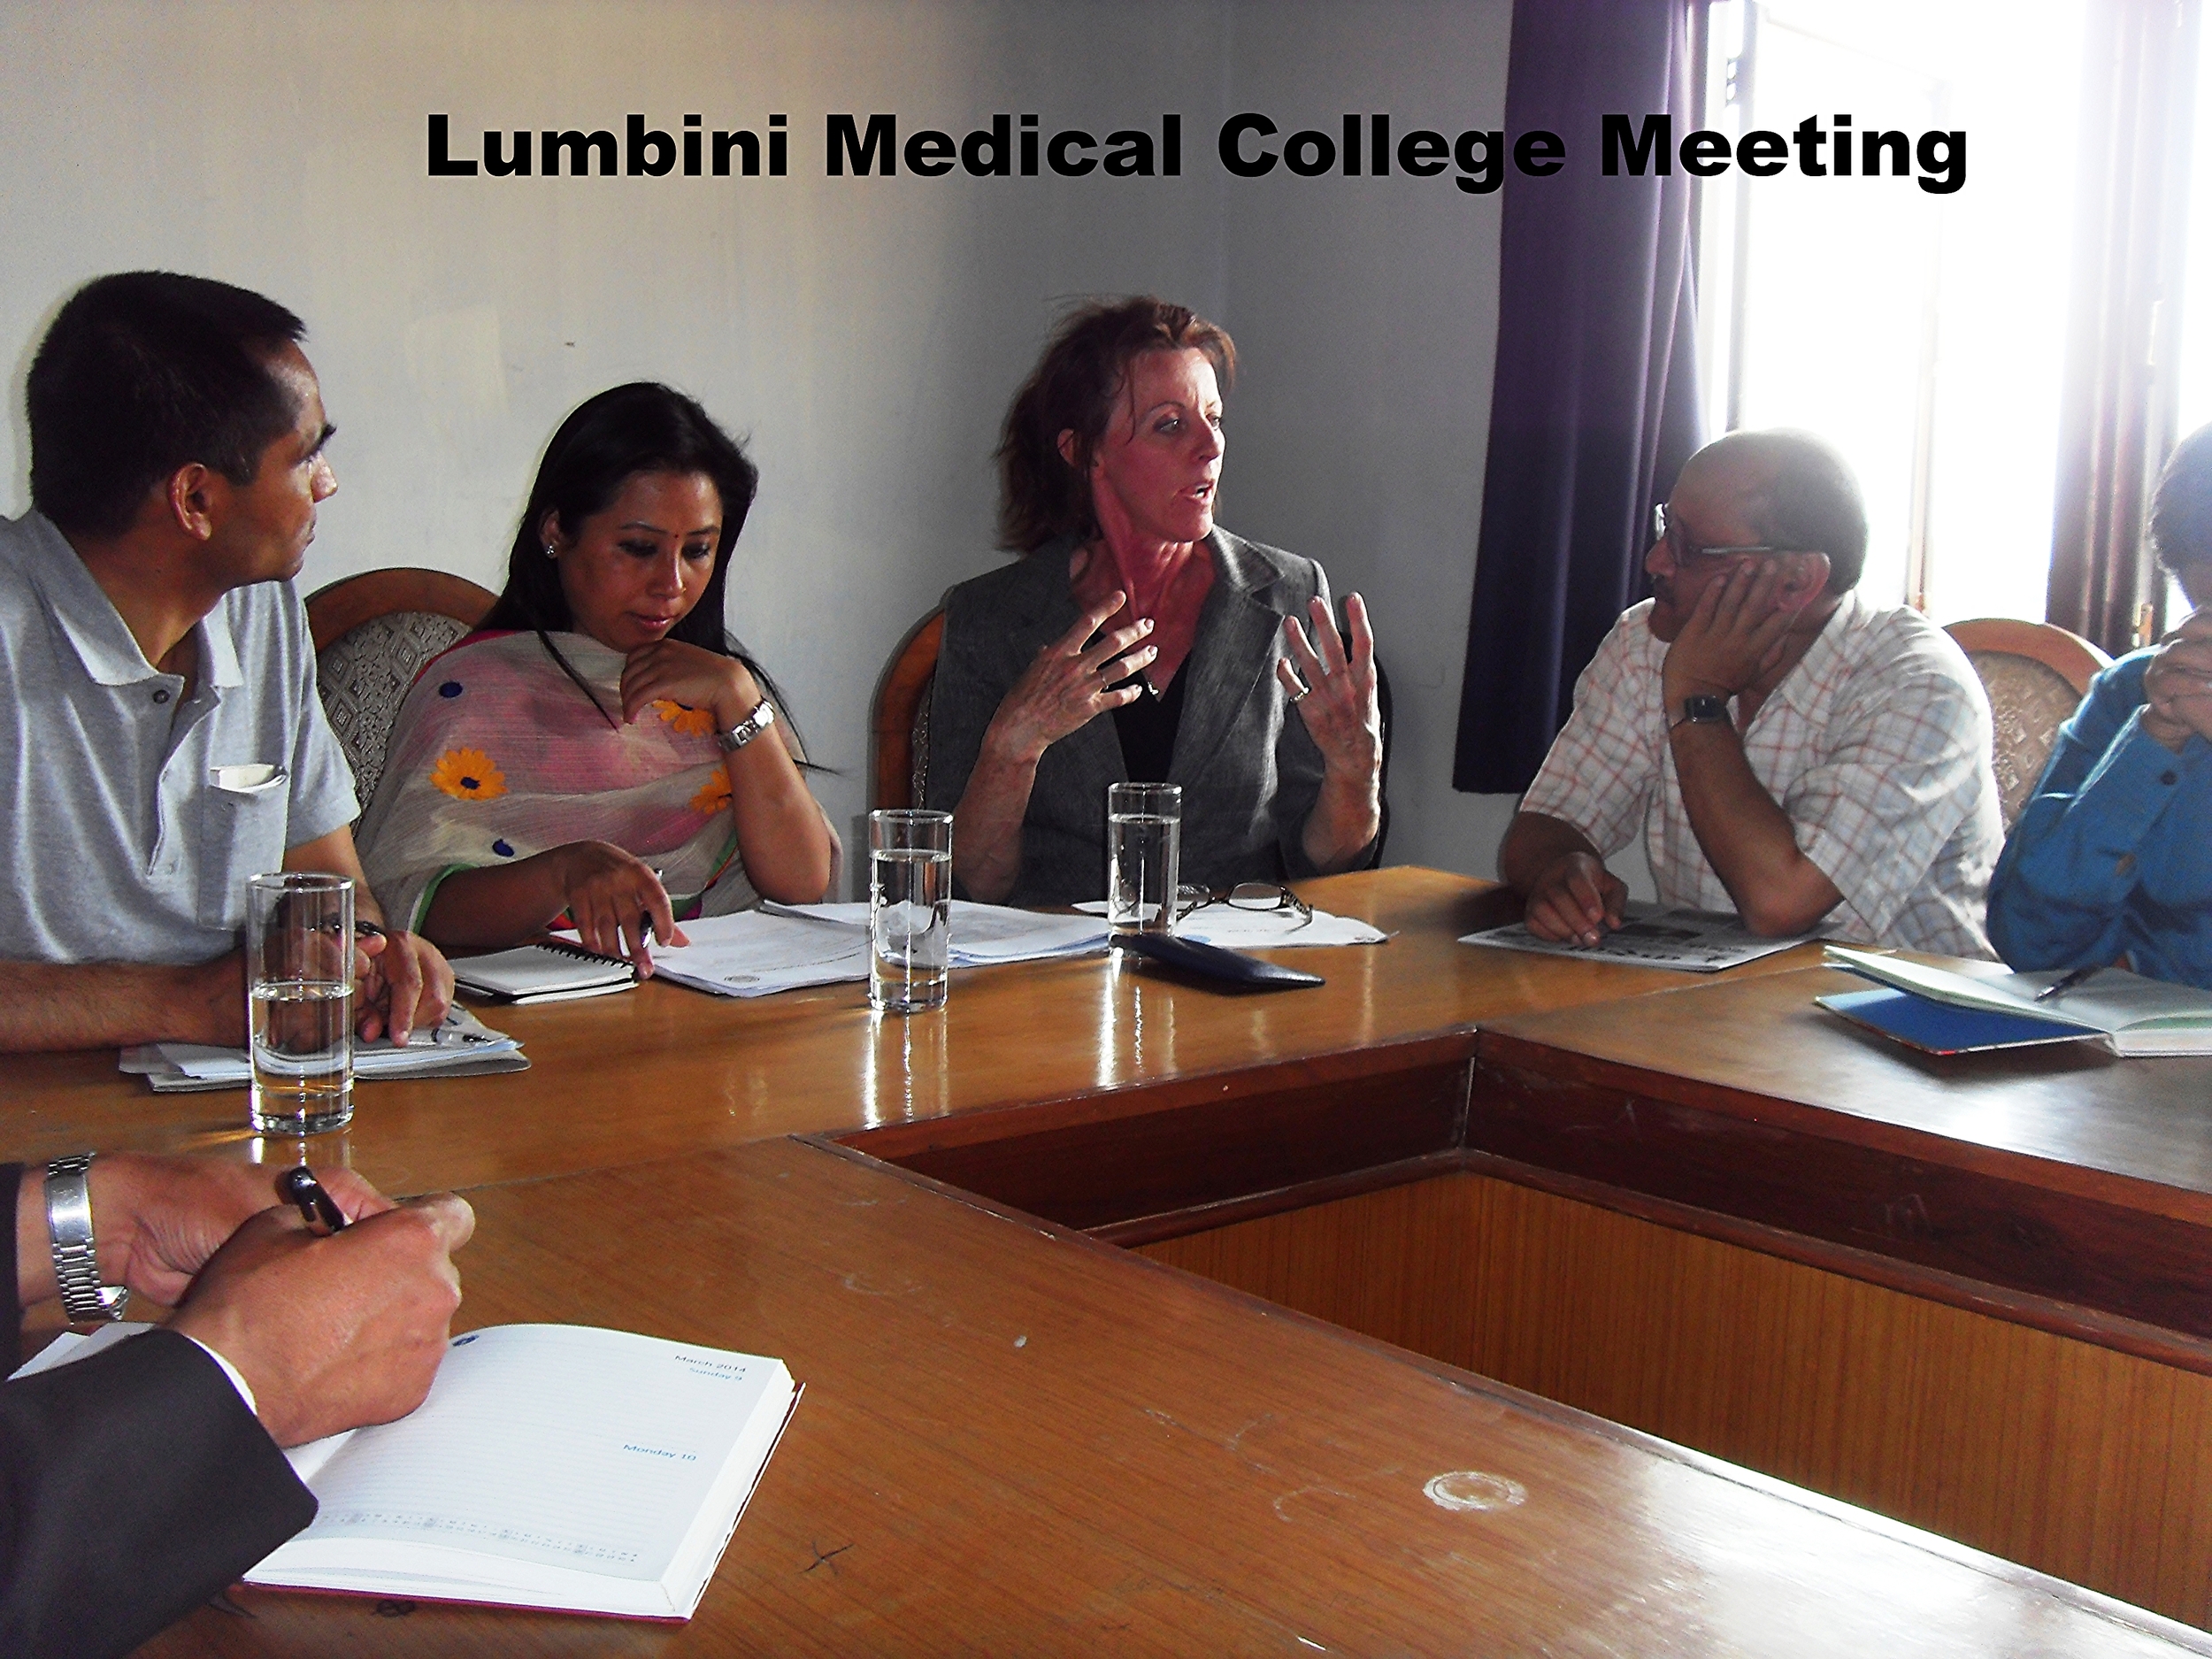  Lumbini Medical College meeting. 